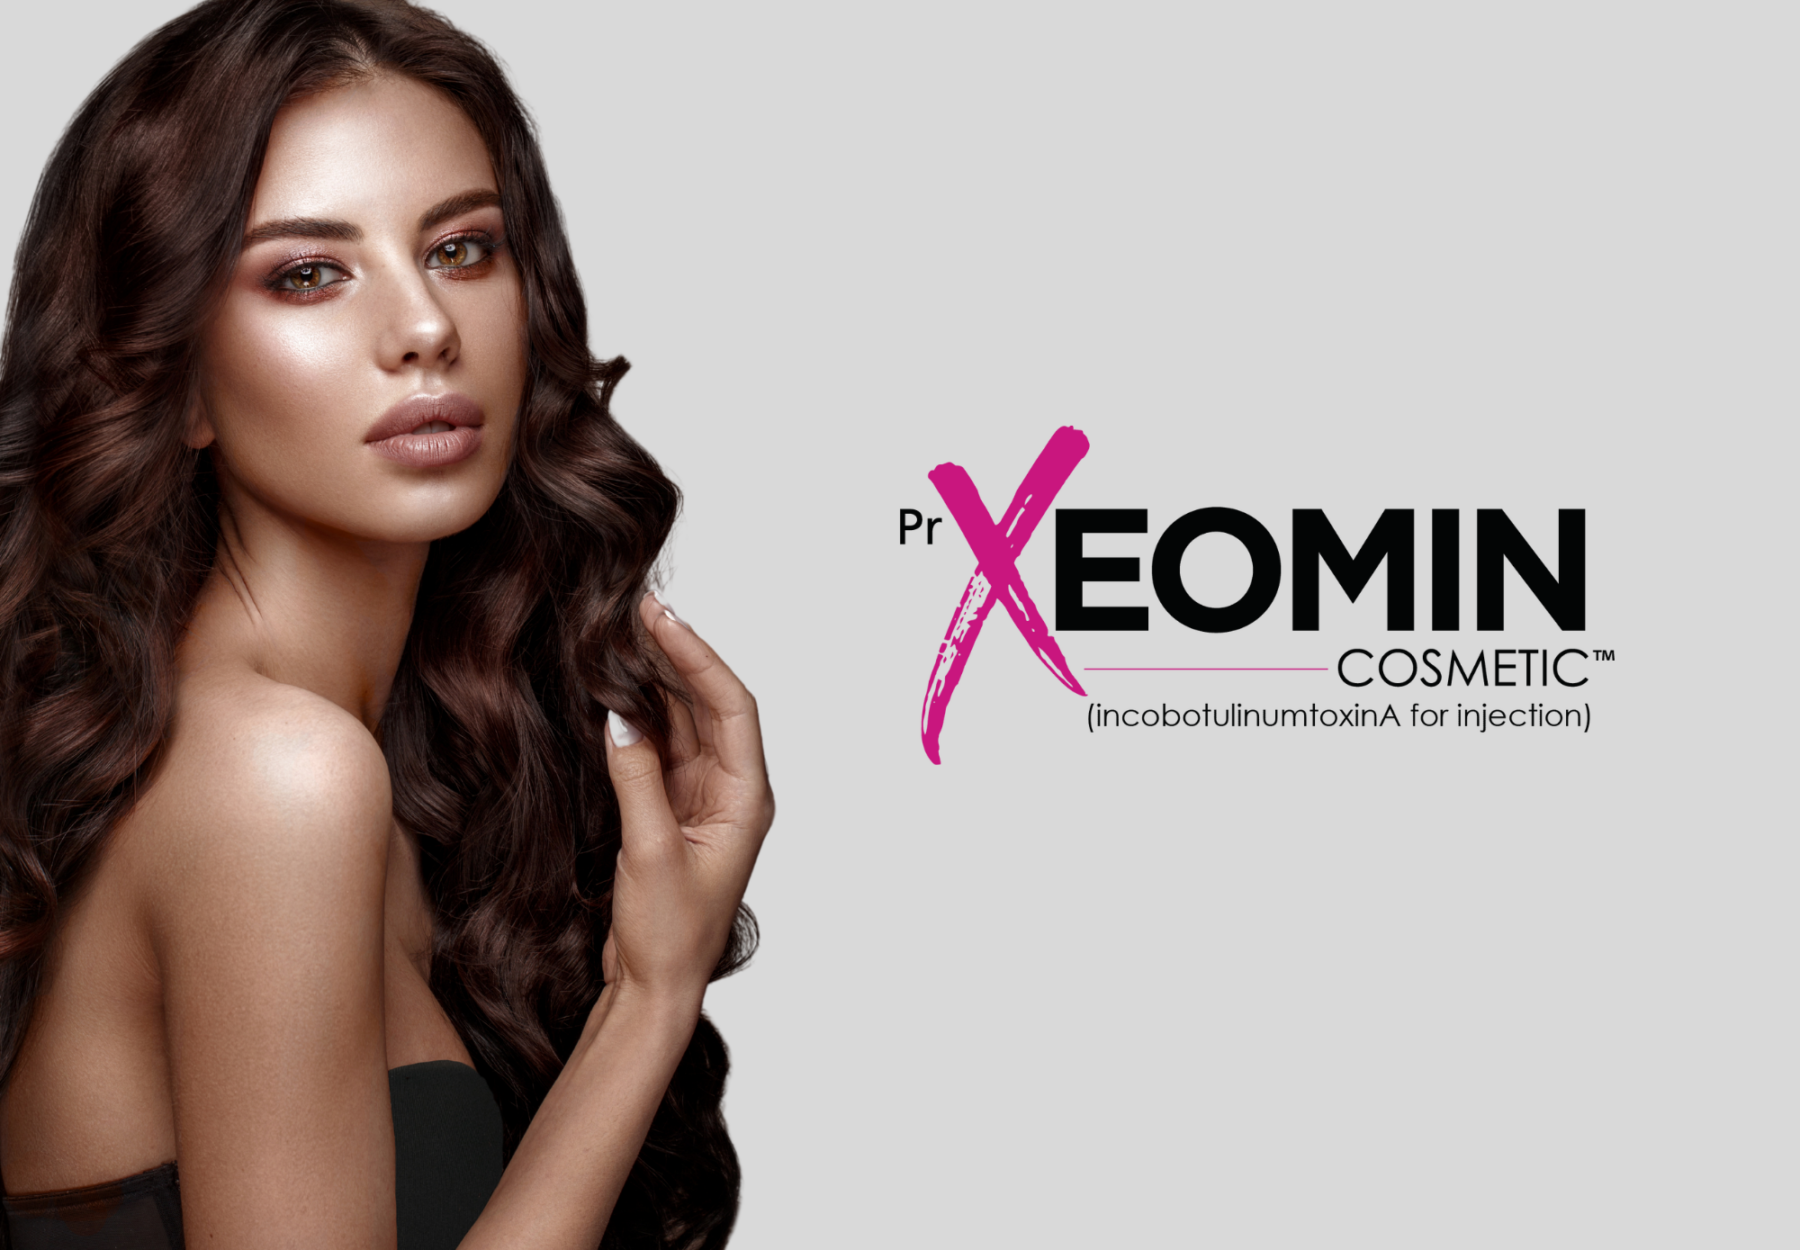 Xeomin logo with model woman.